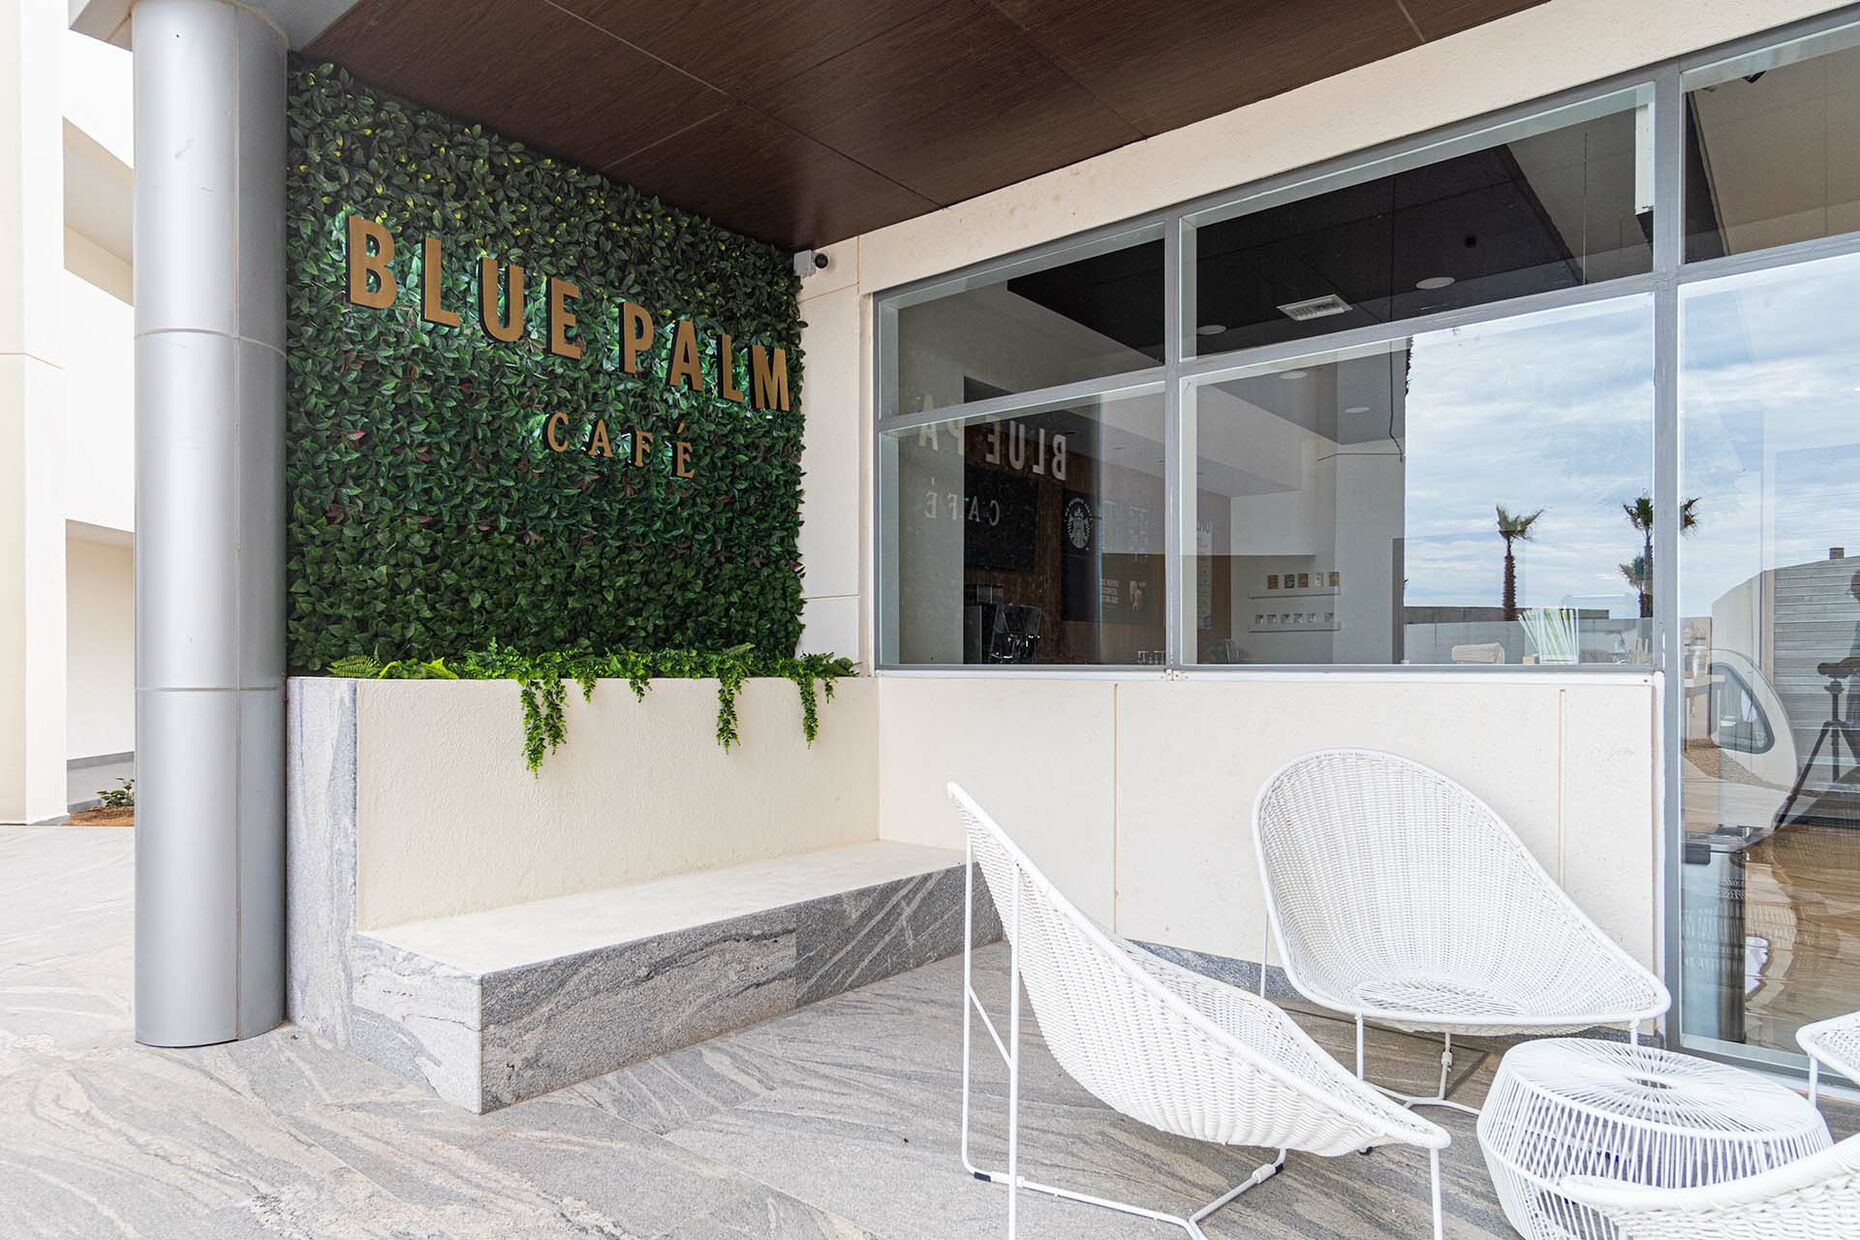 Blue Palm Cafe proudly serves Star Bucks Coffee